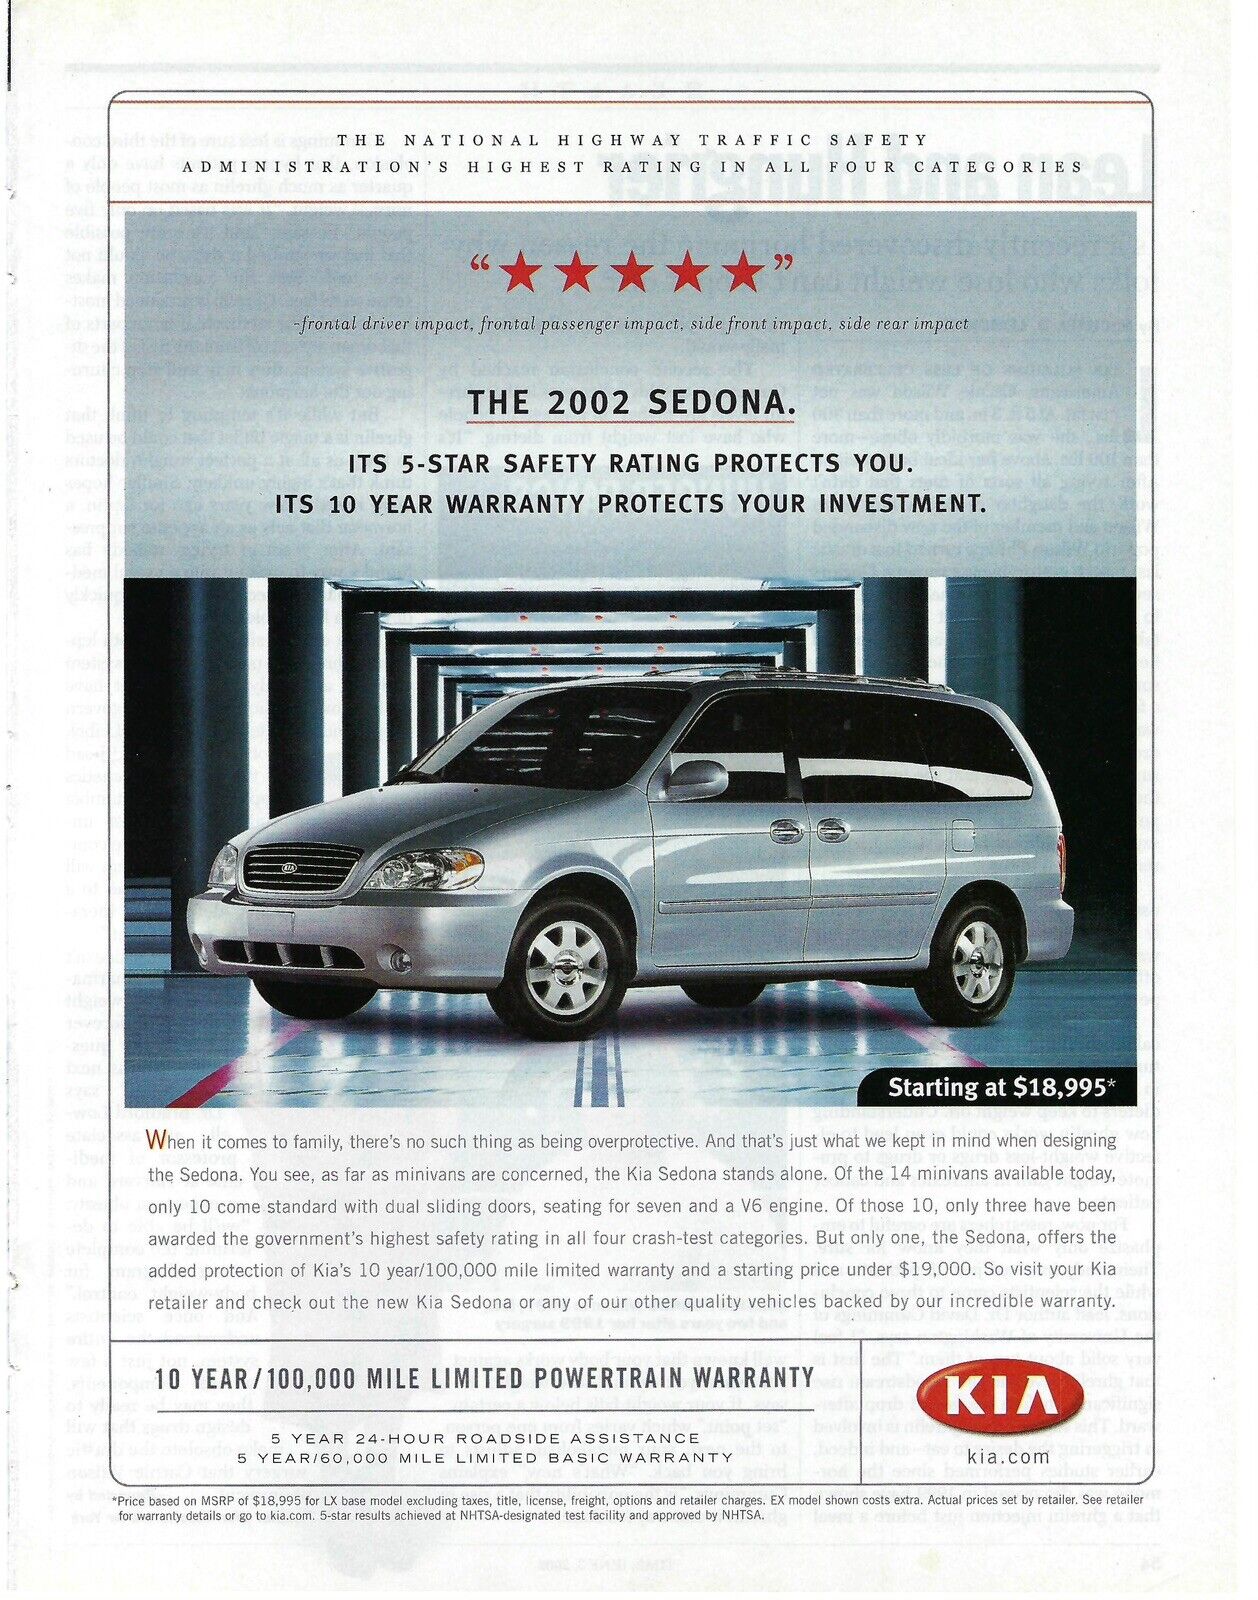 2002 Kia Sedona 5-Star Safety Rating Protects You Vintage Mag Print Ad/Poster